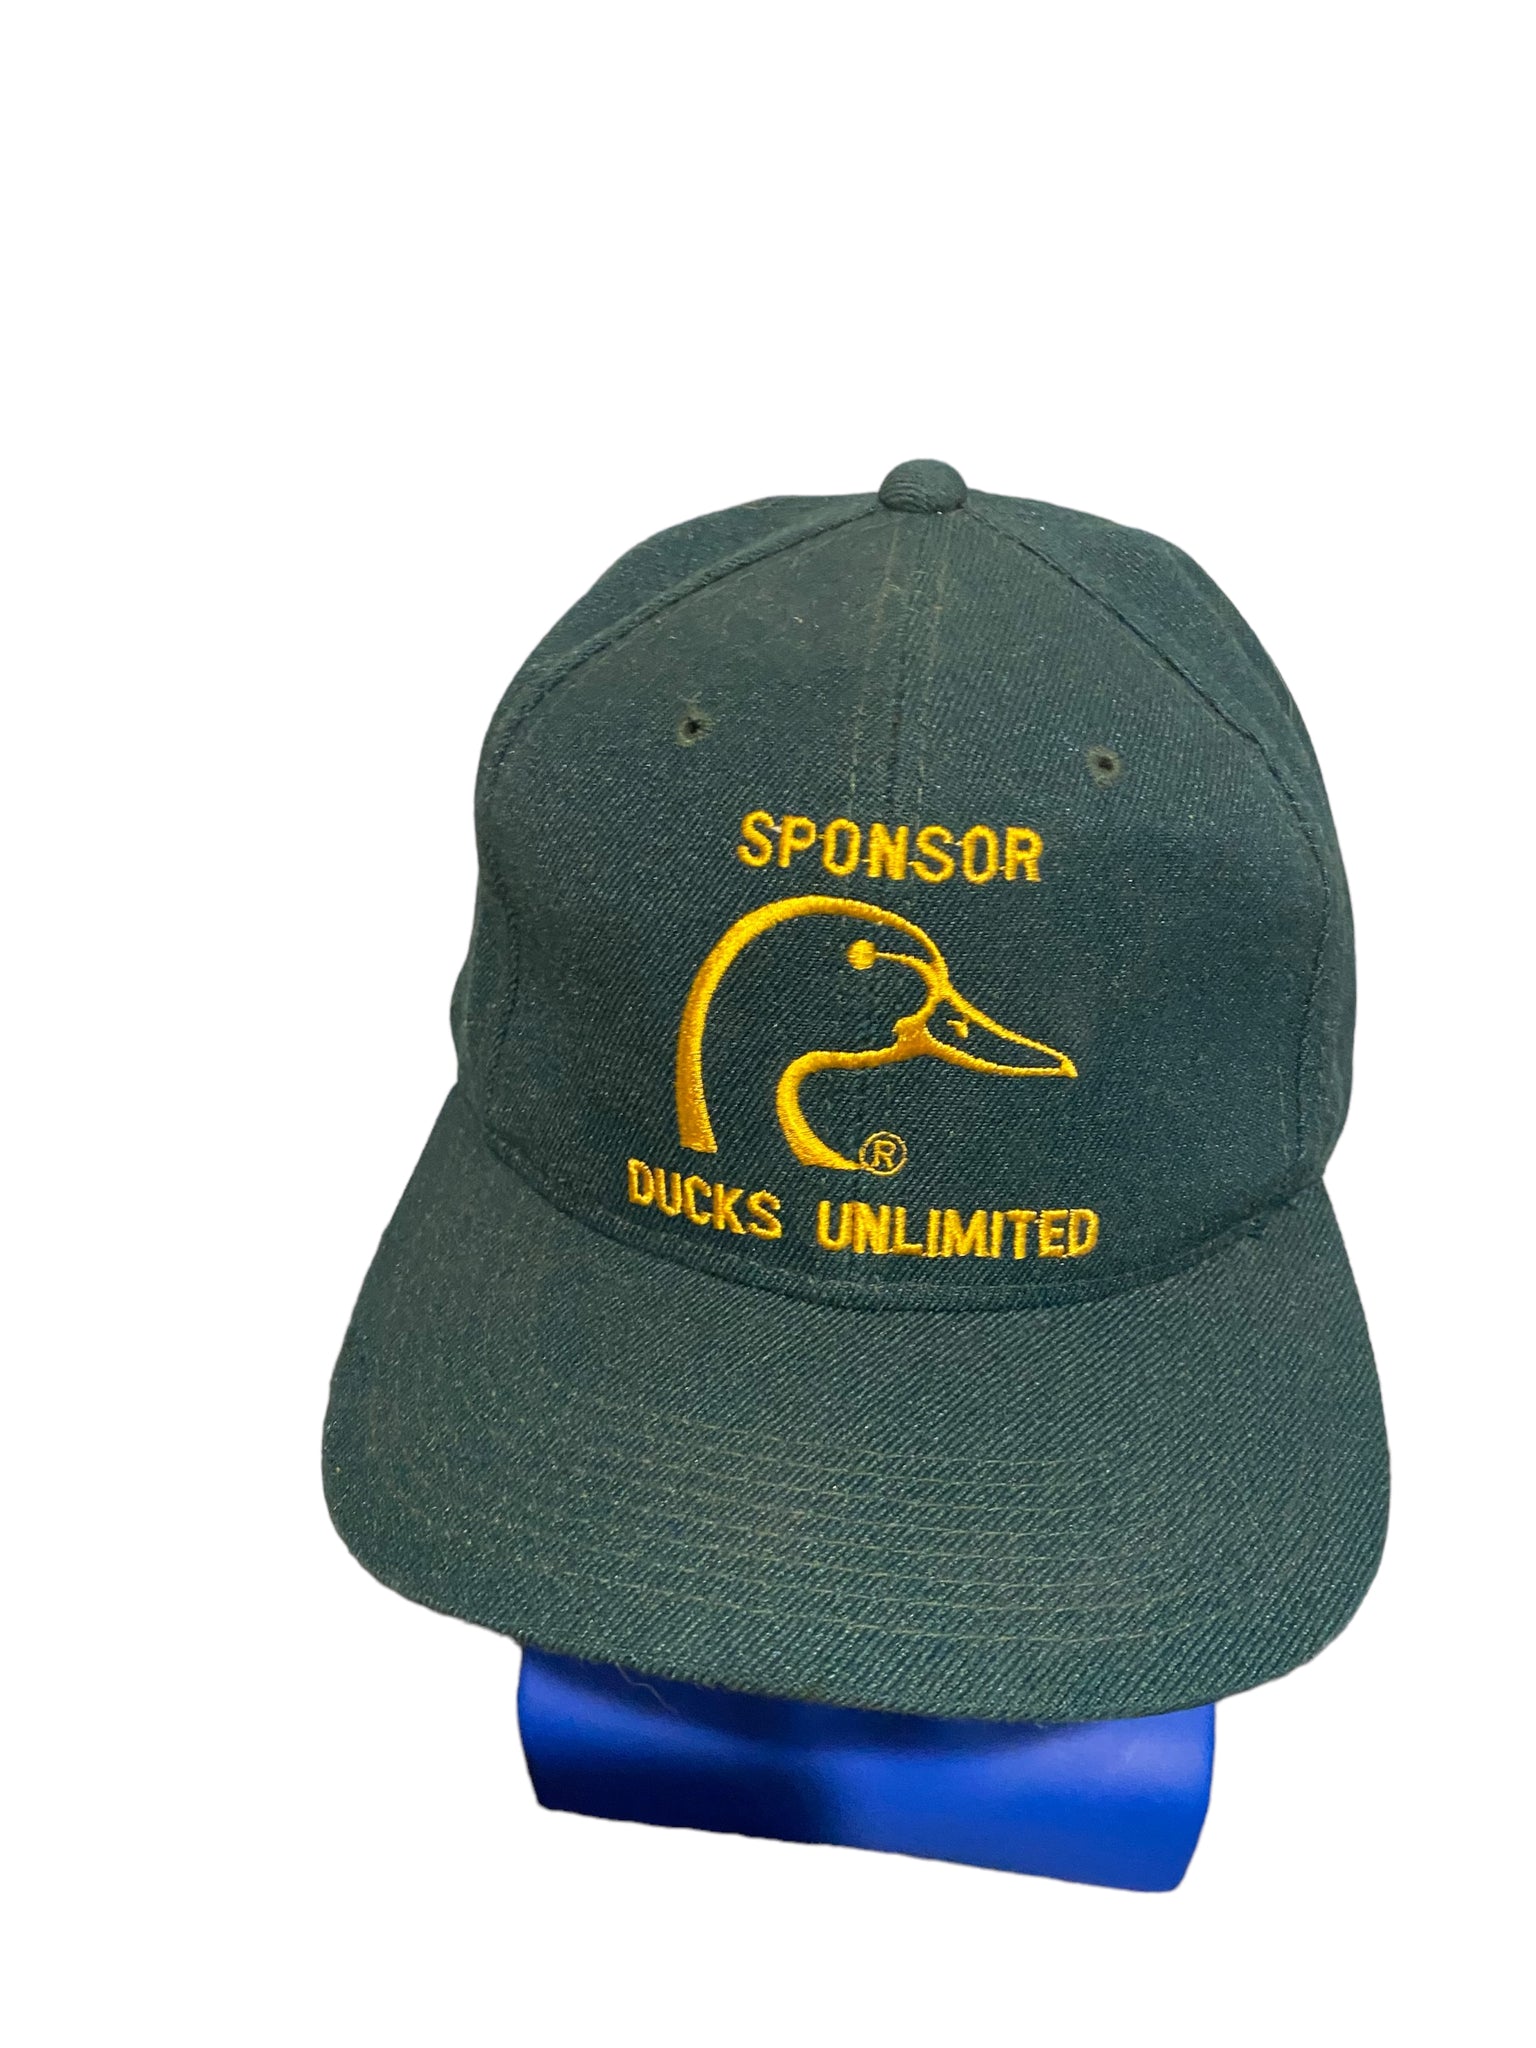 Vintage Ducks Unlimited Green Sponsor Hat Youngan SnapBack